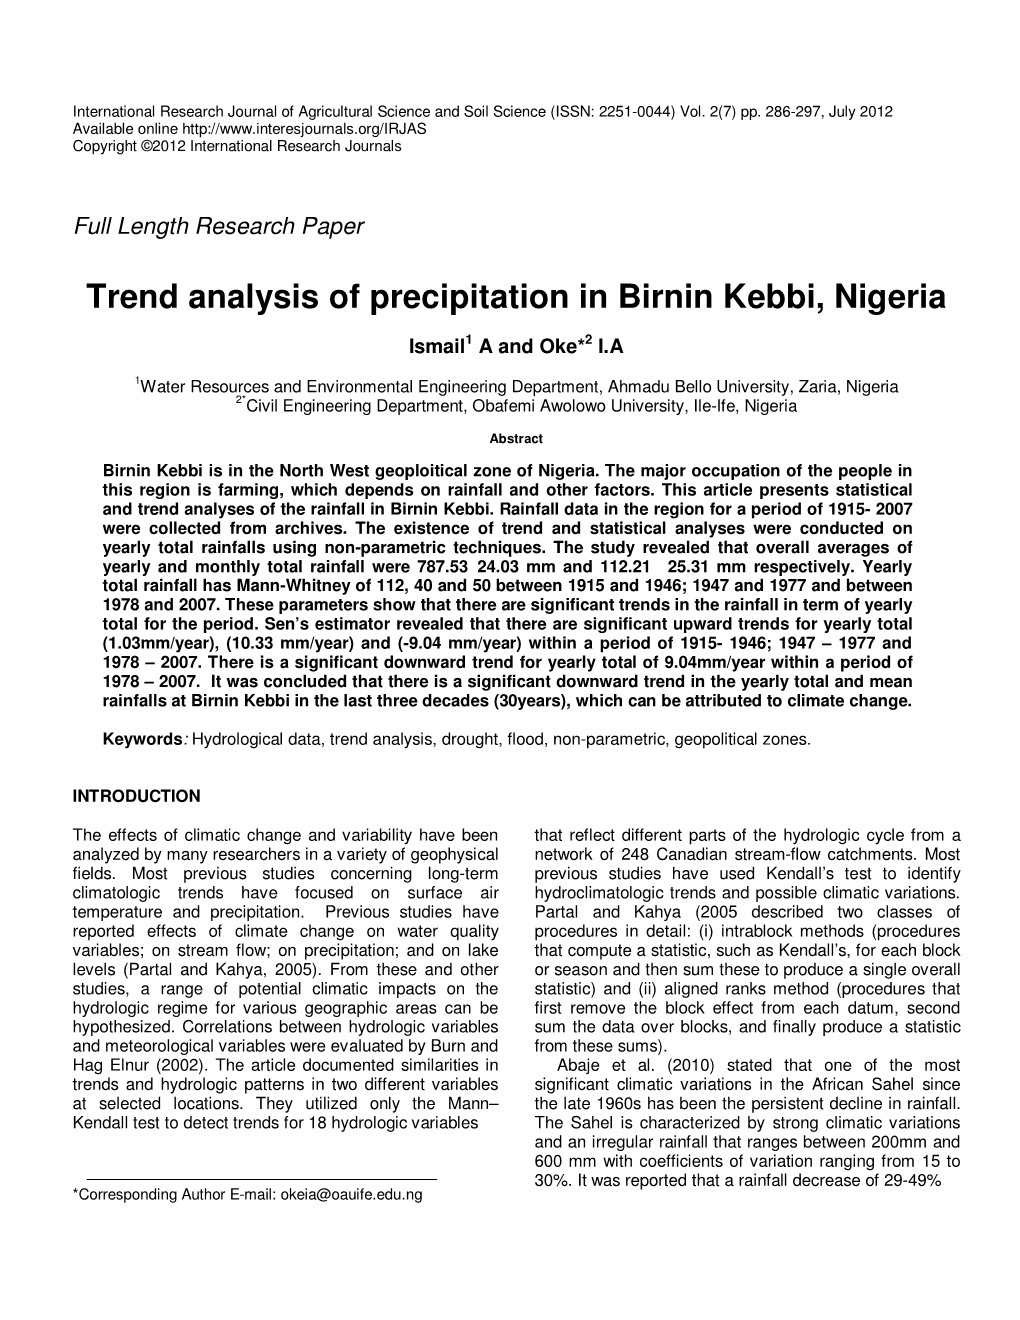 Trend Analysis of Precipitation in Birnin Kebbi, Nigeria